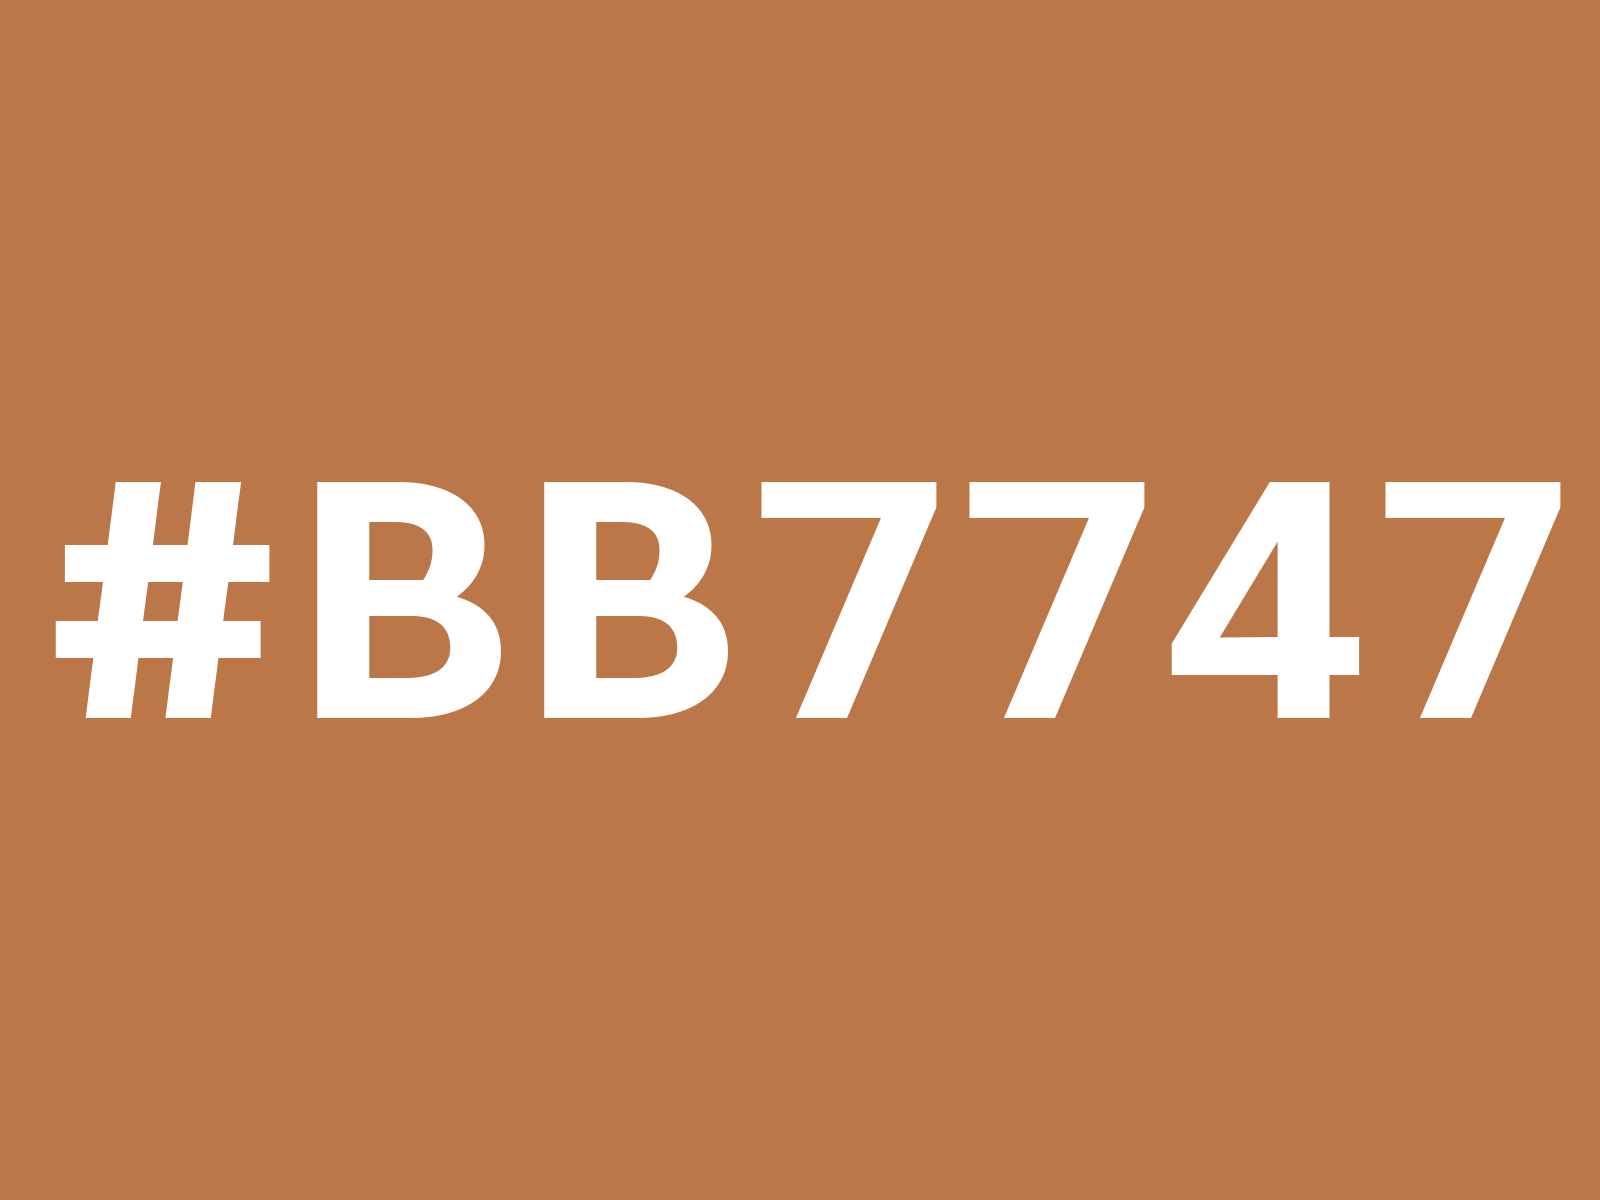 bb7747